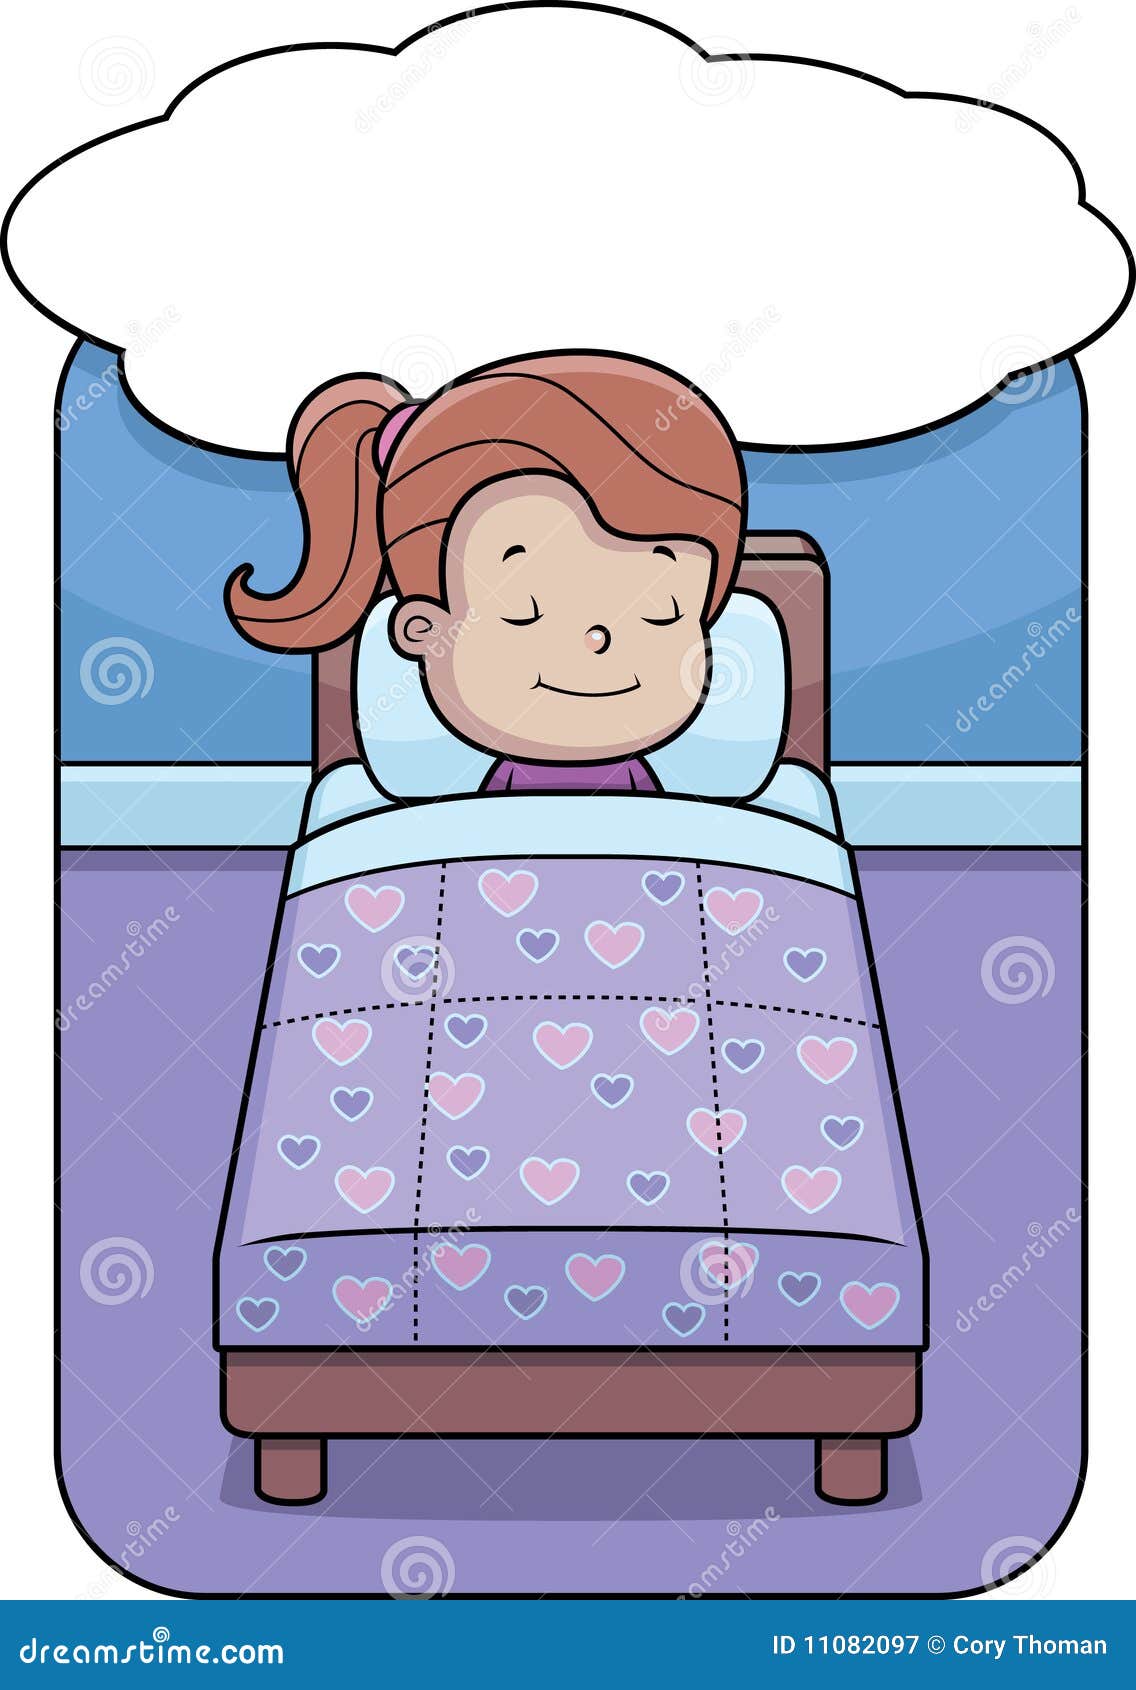 cartoon girl sleeping in bed clip art